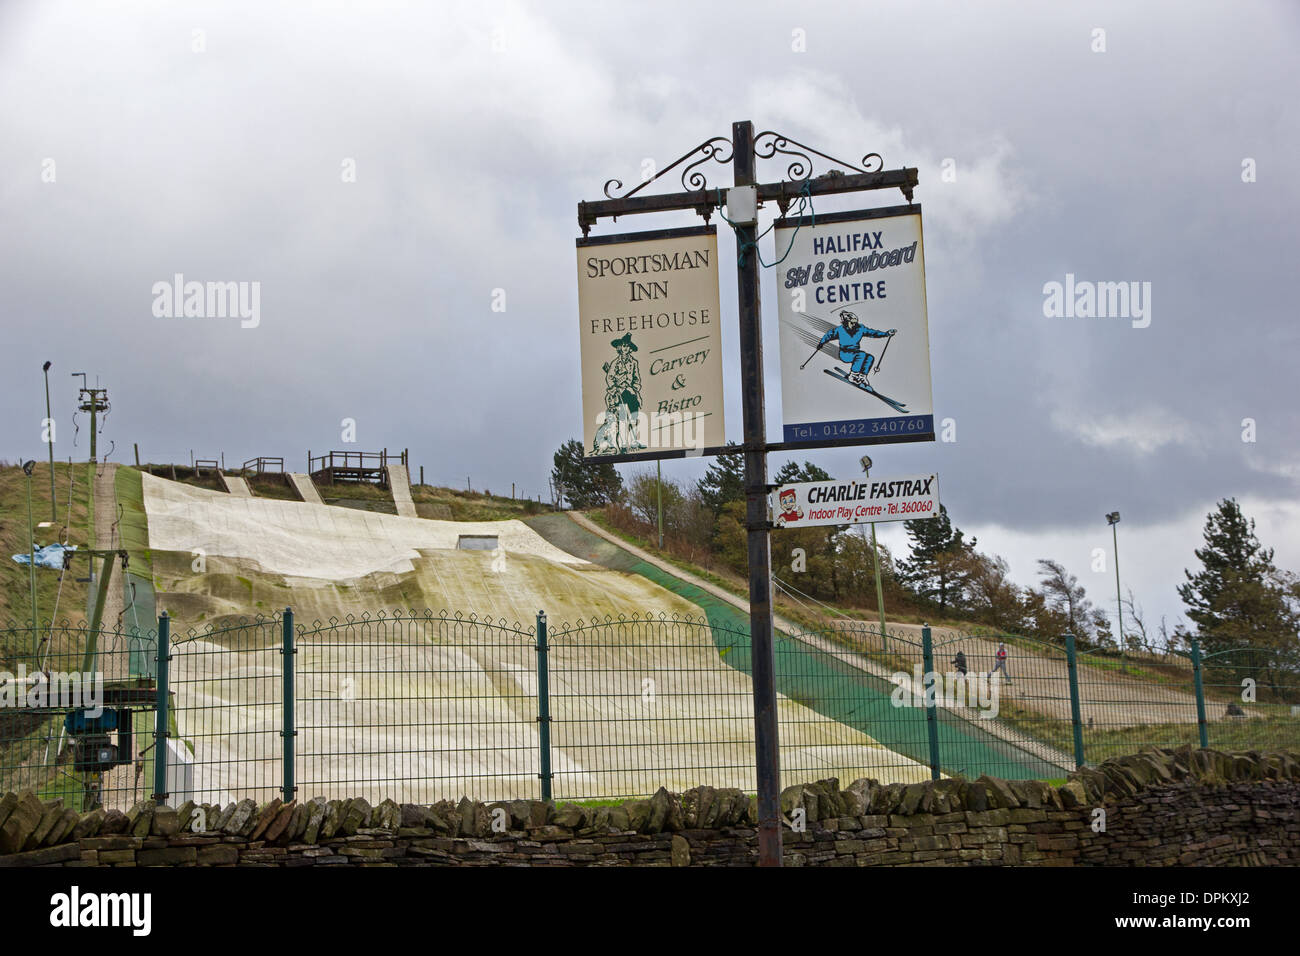 Halifax Ski & Snowboard centre Stock Photo